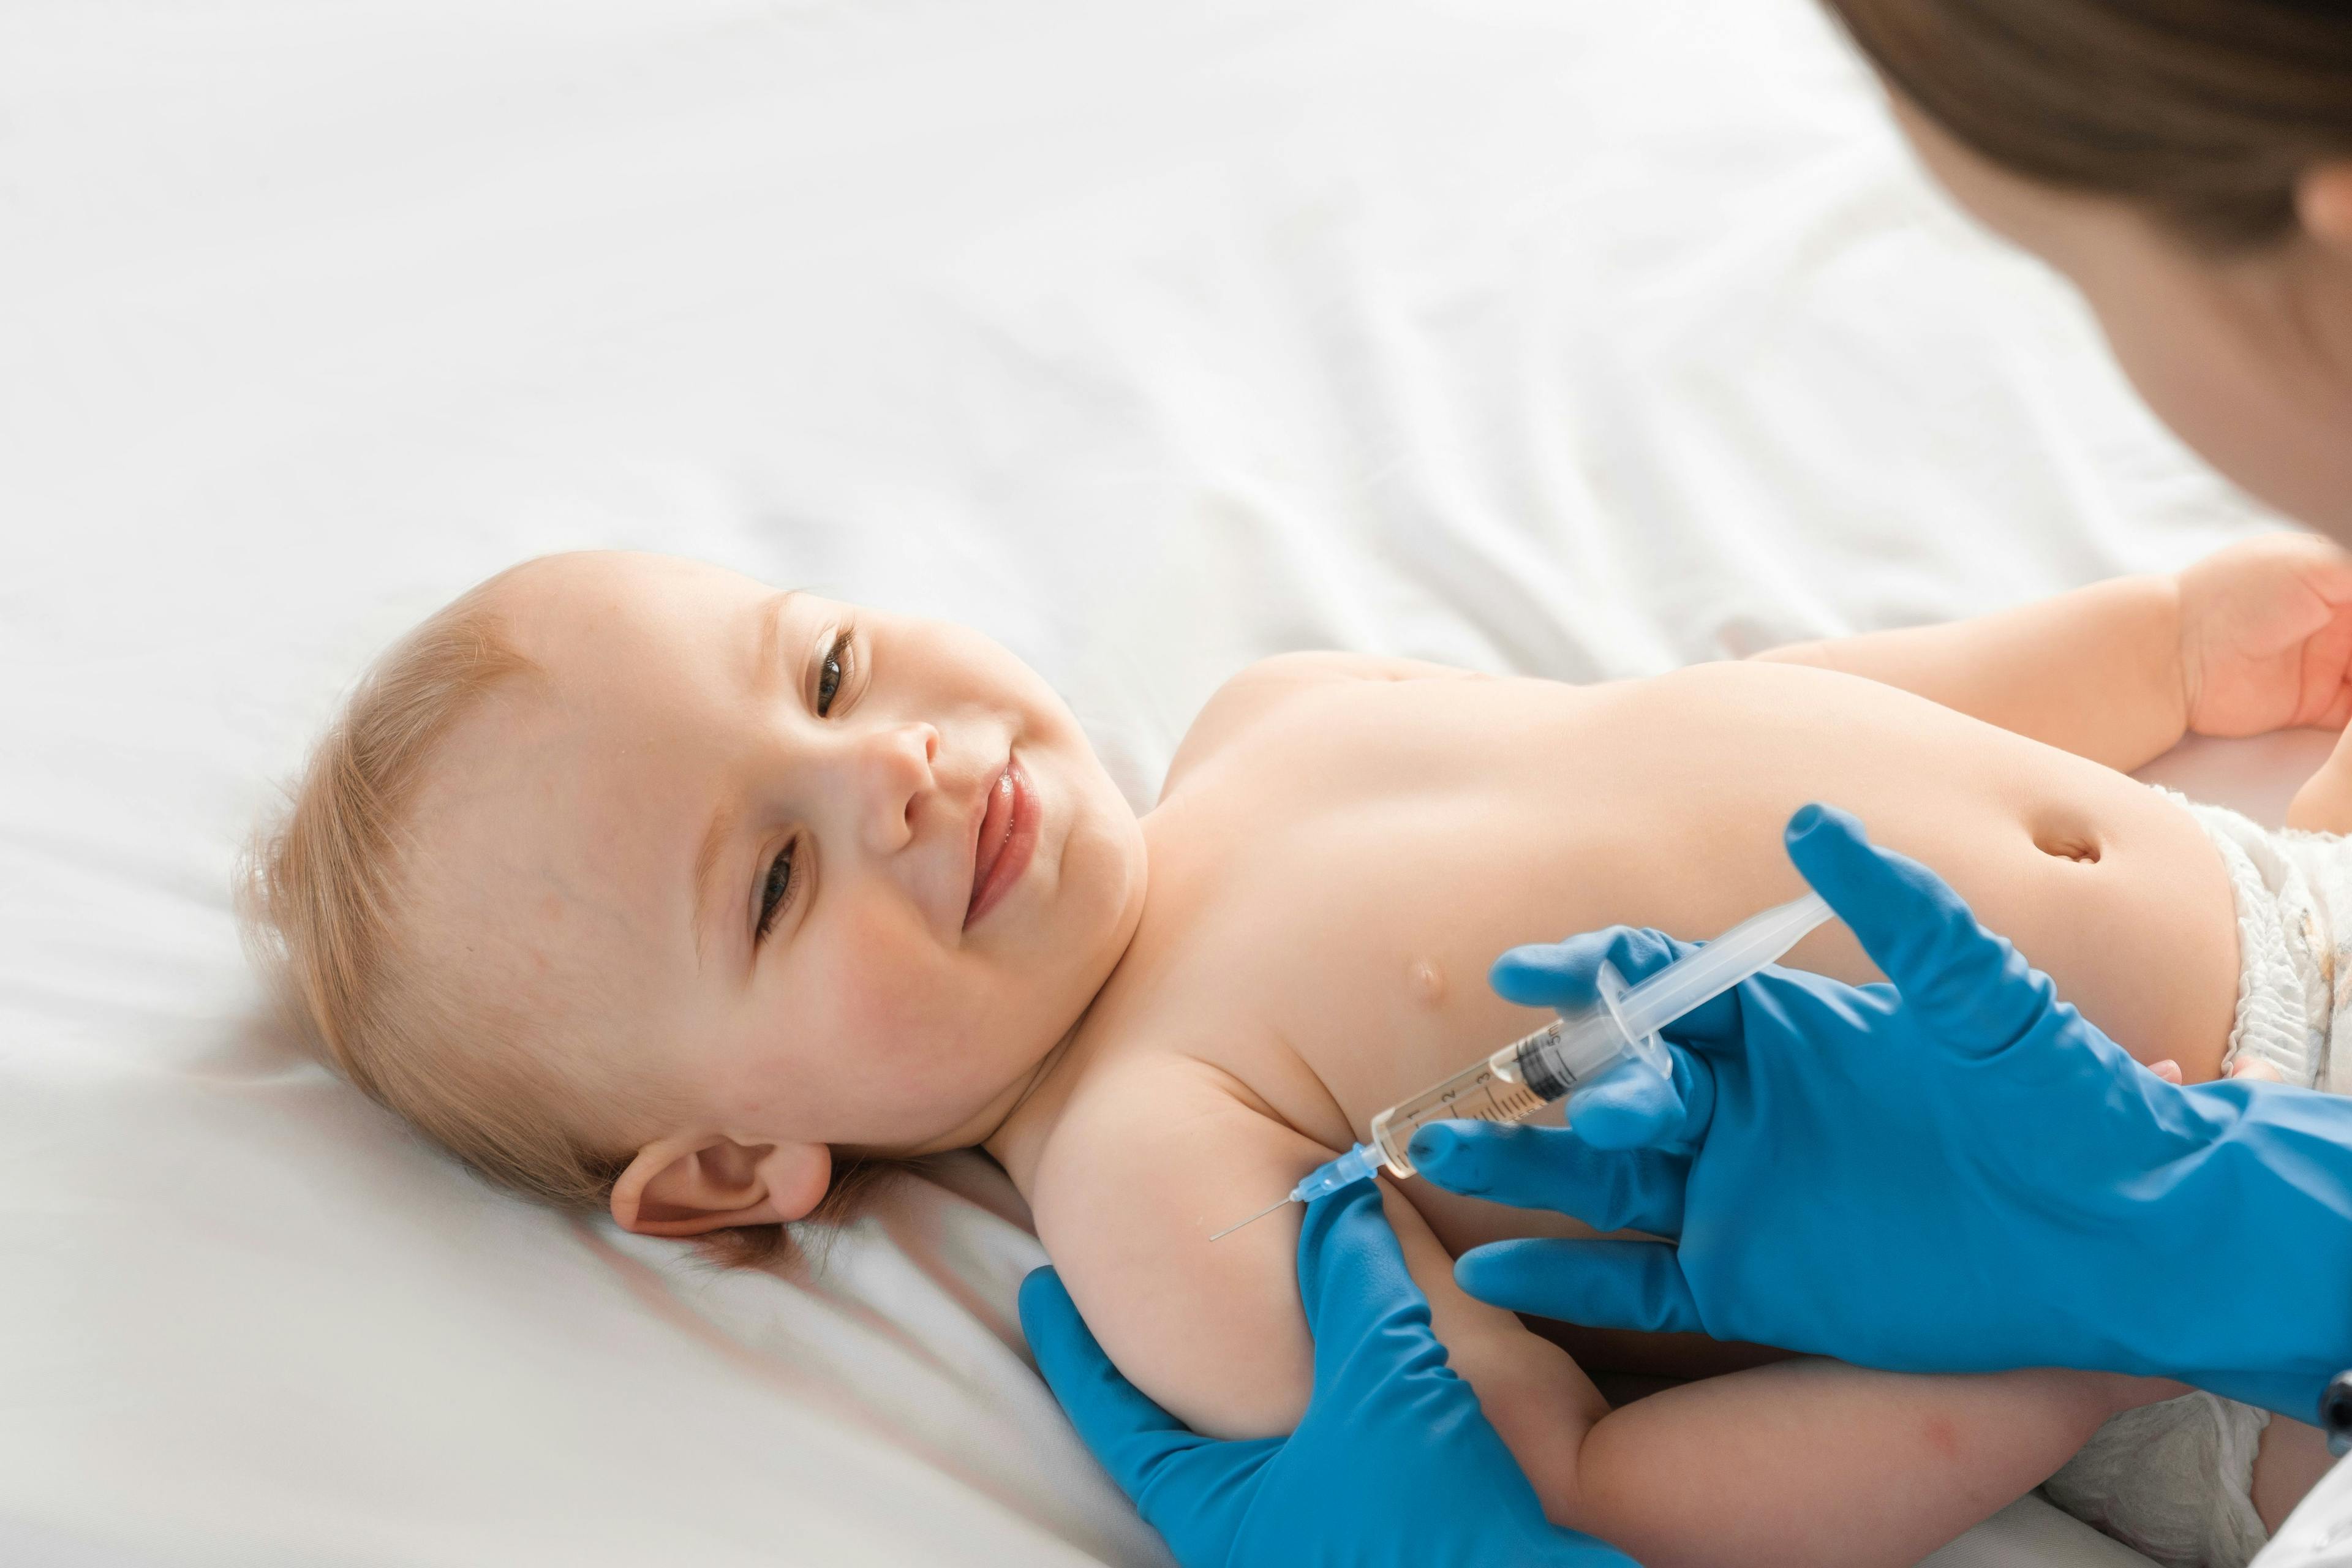 Infant receiving vaccination / Marina Demidiuk - stock.adobe.com